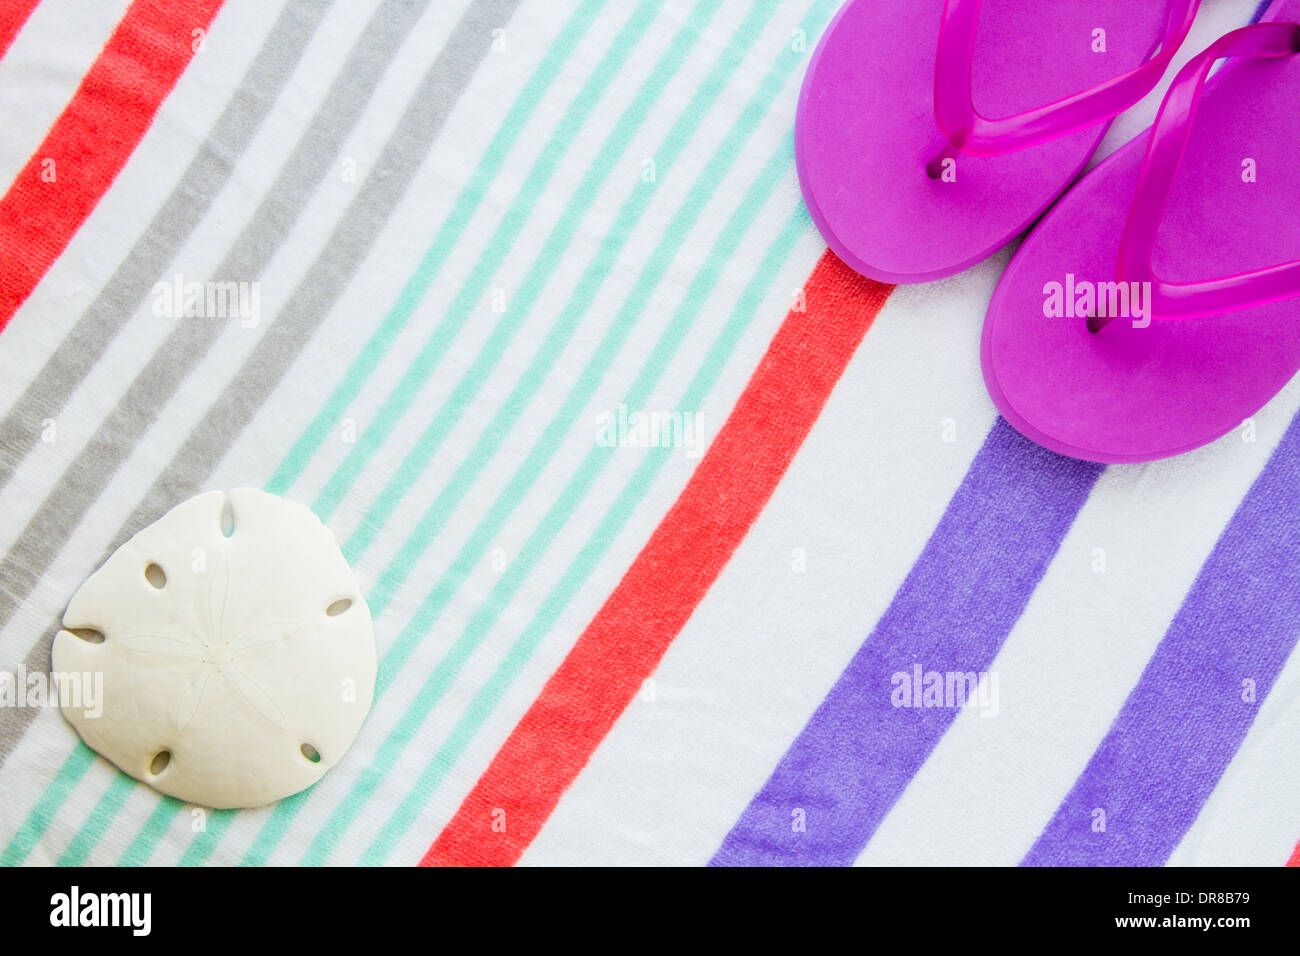 Beach scene with purple flip flops and a sand dollar on a striped beach towel. Stock Photo